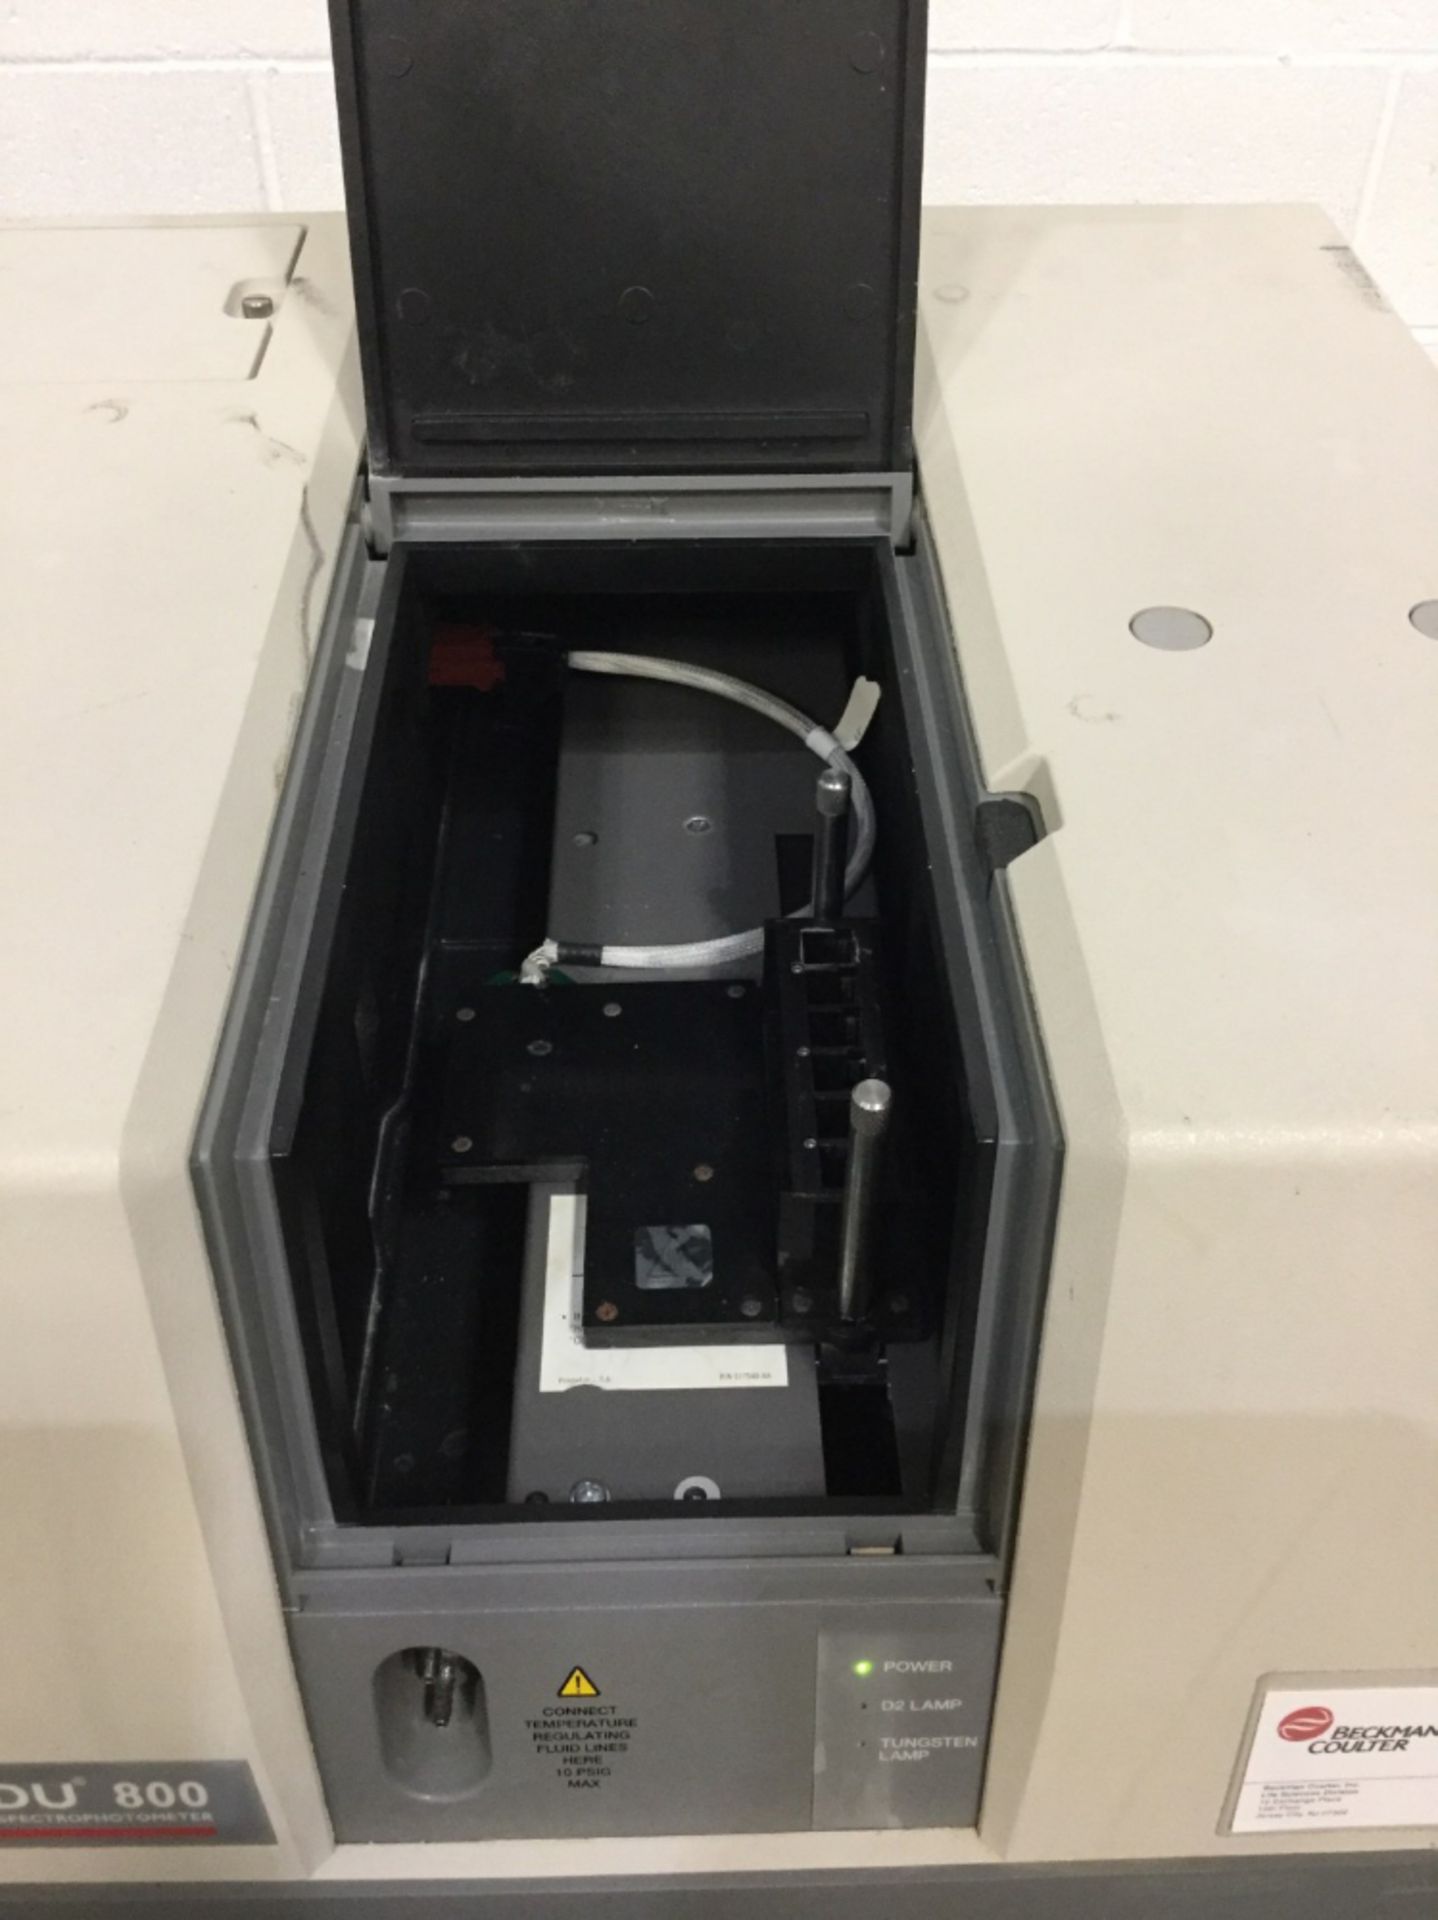 Beckman Coulter DU 800 Series Spectrophotometer - Image 5 of 5